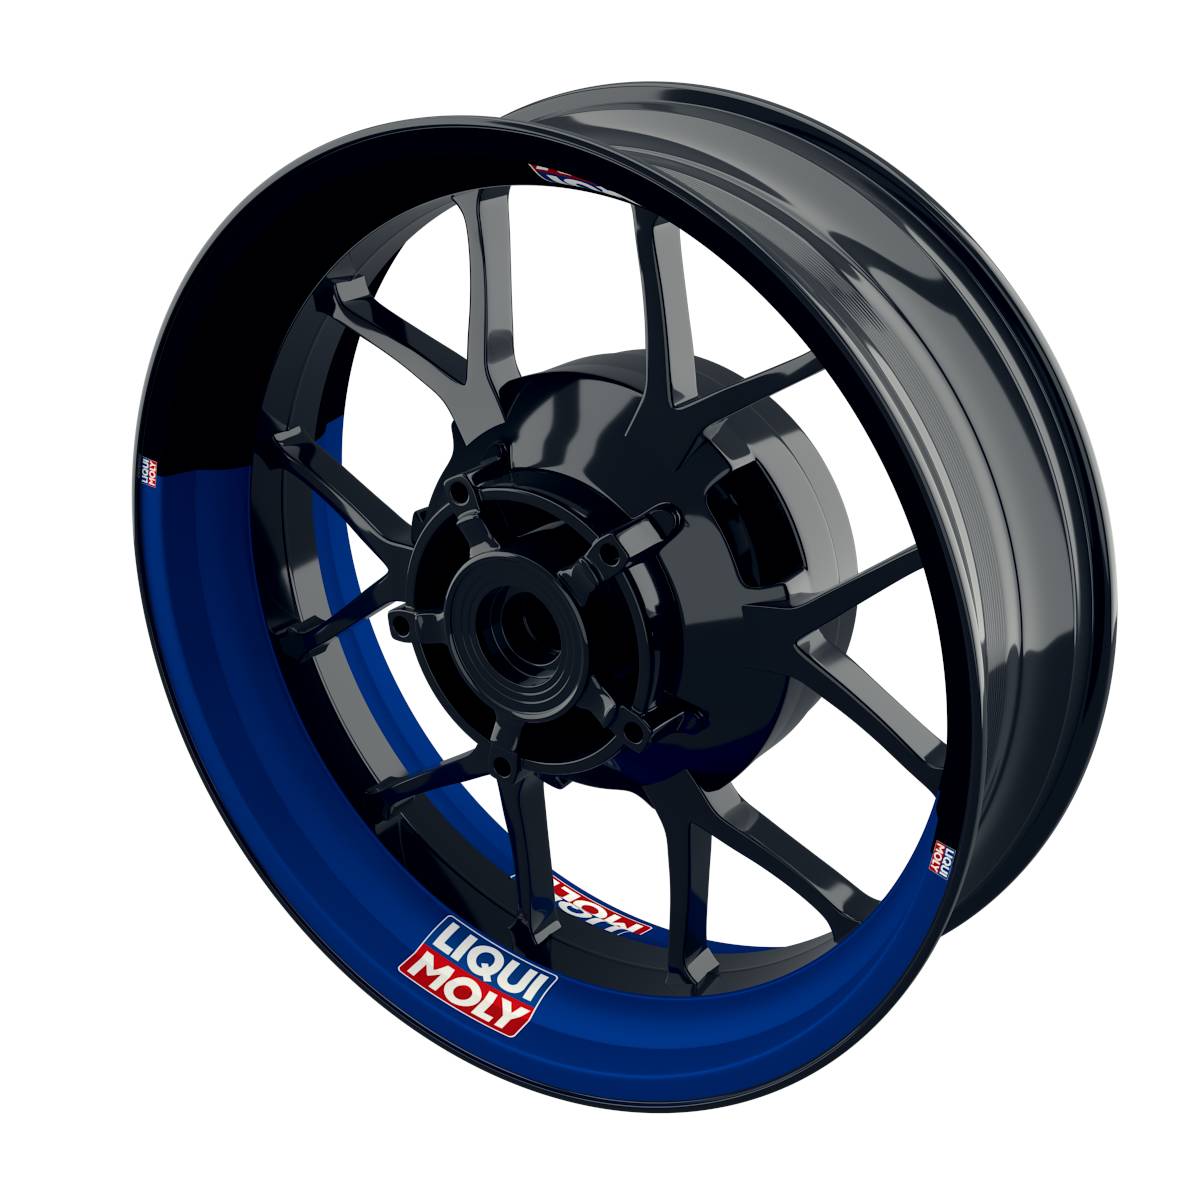 Liqui Moly Rim Decals Motiv Halb Halb black Wheelsticker Premium